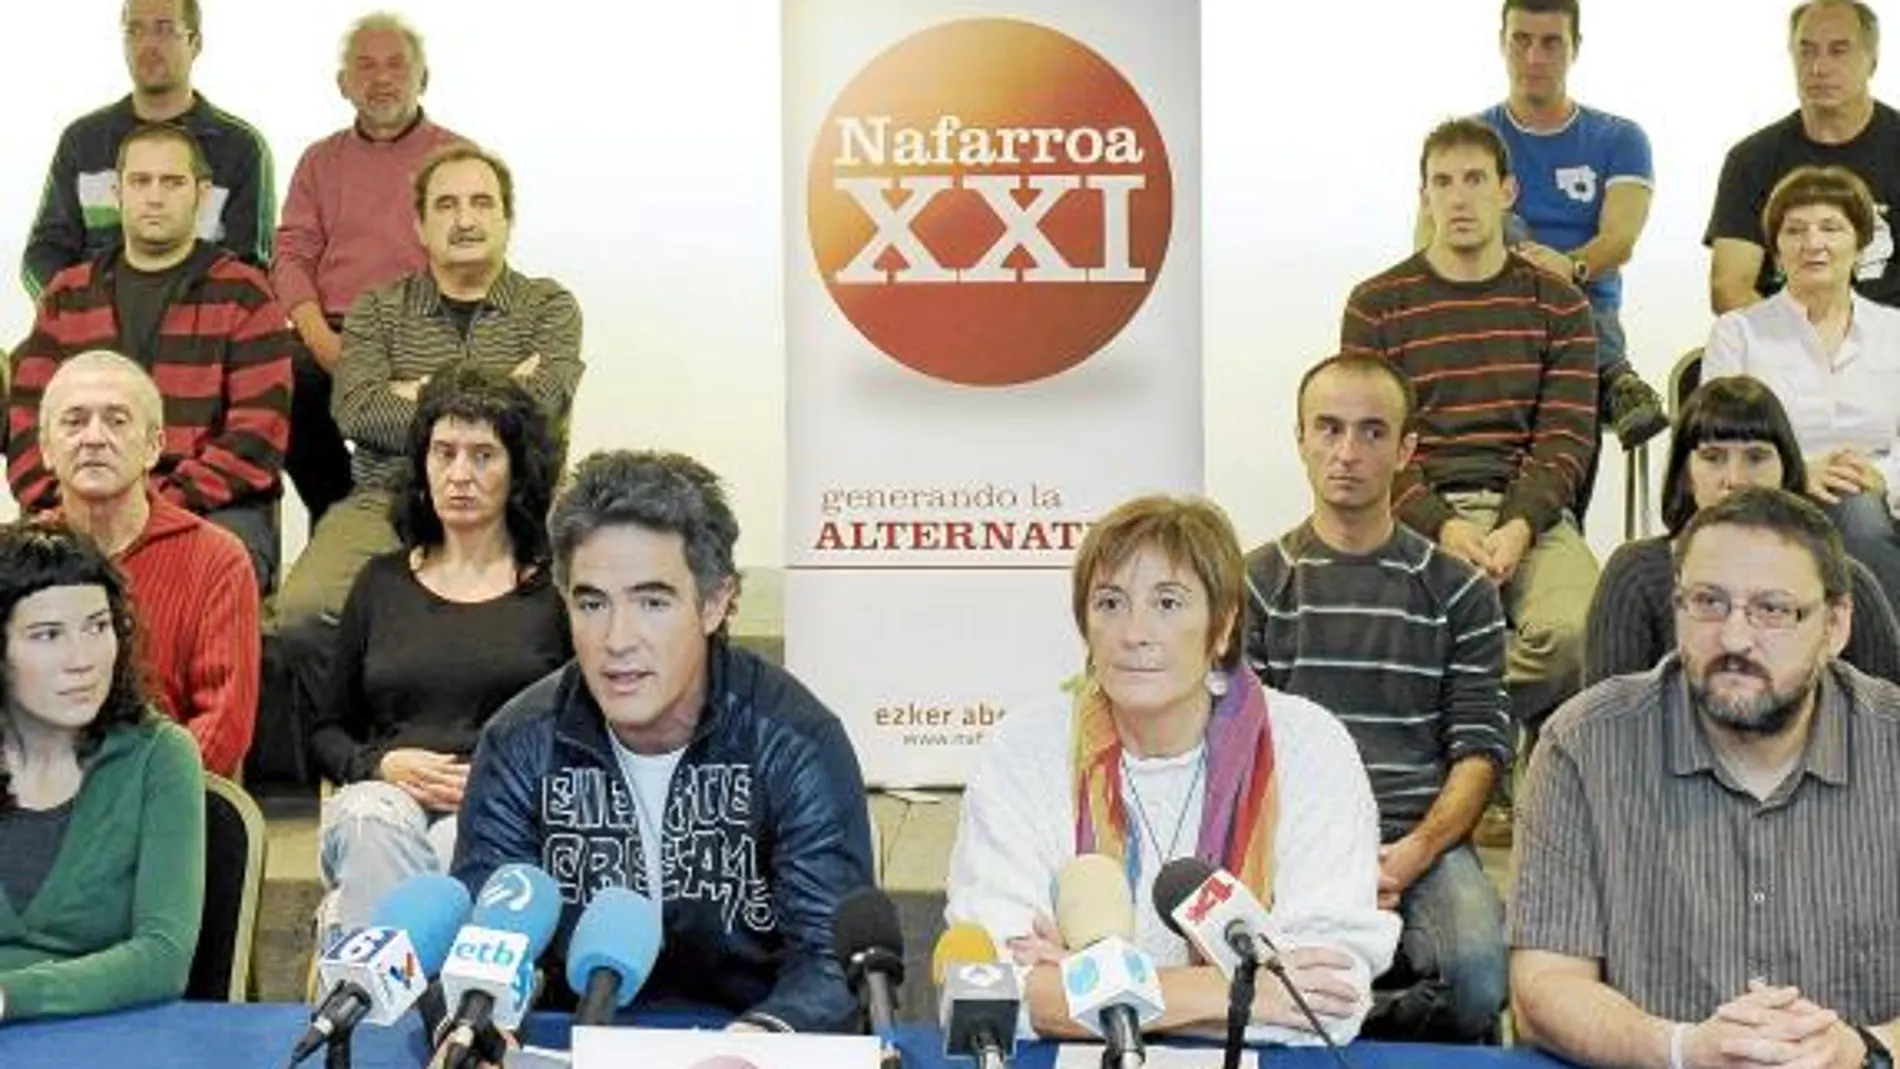 Rueda de prensa de la izquierda abertzale, ayer, en Pamplona